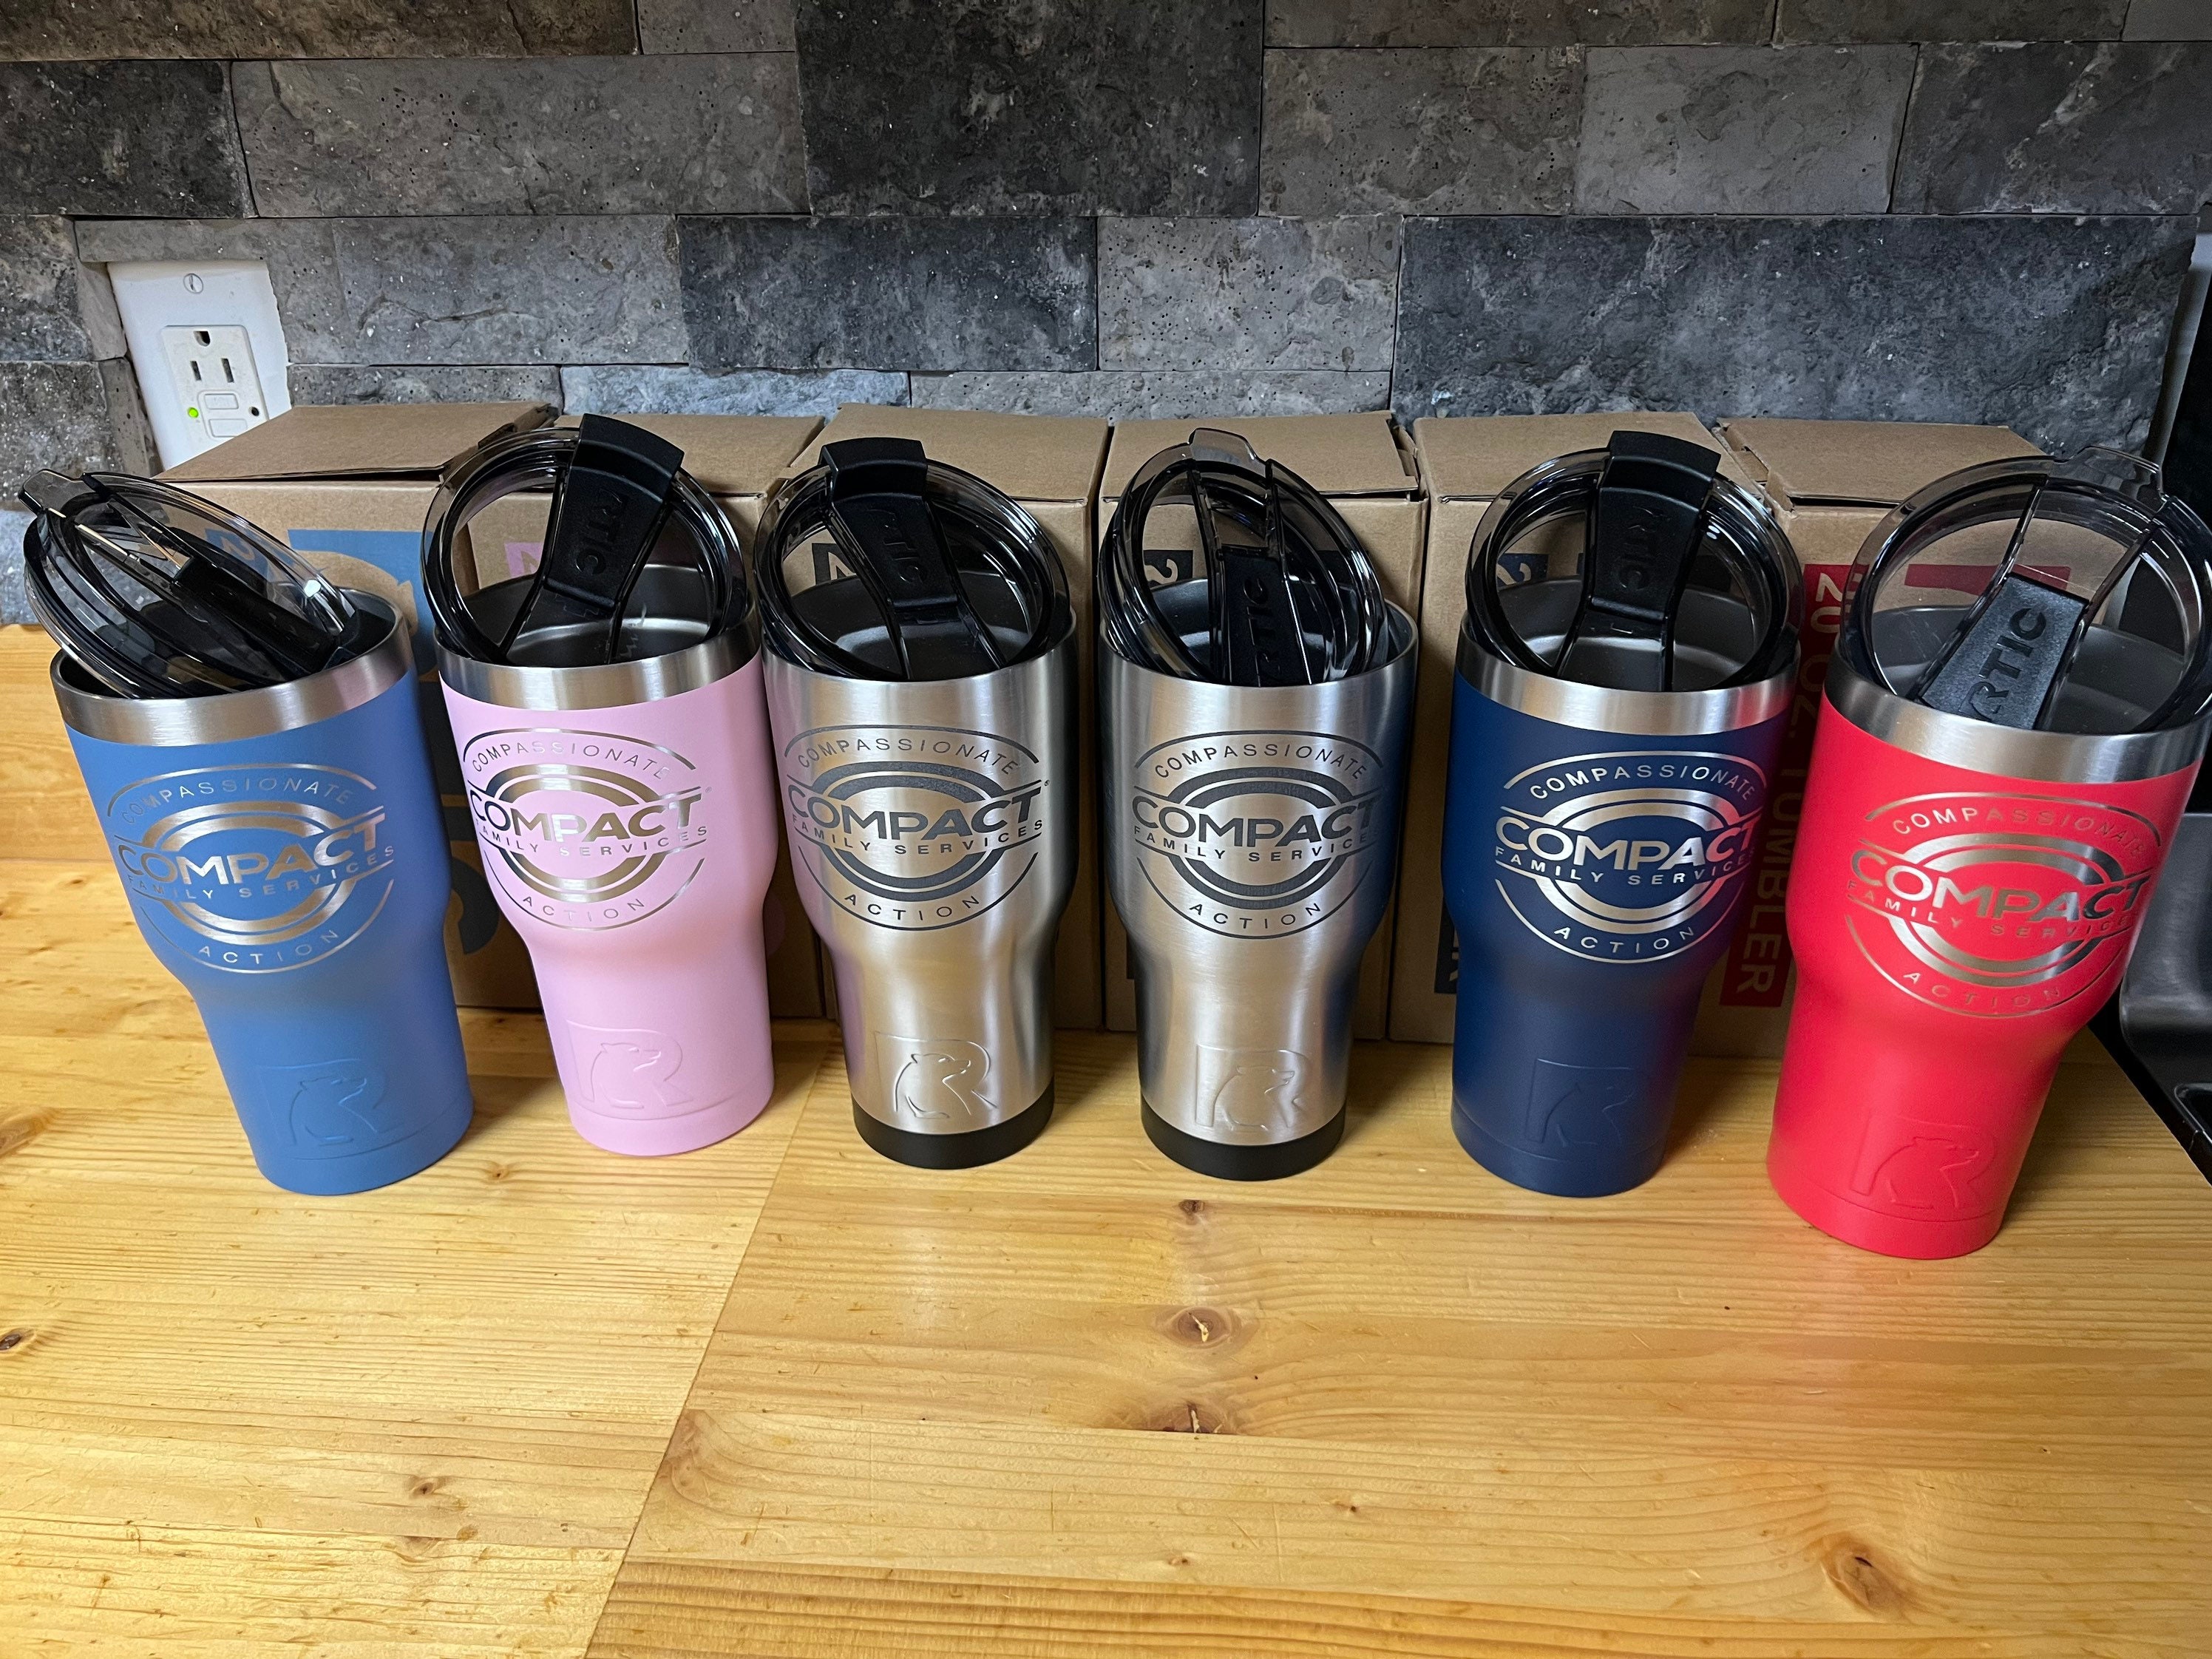 Customize Your 20oz RTIC Travel Mug – Custom Branding